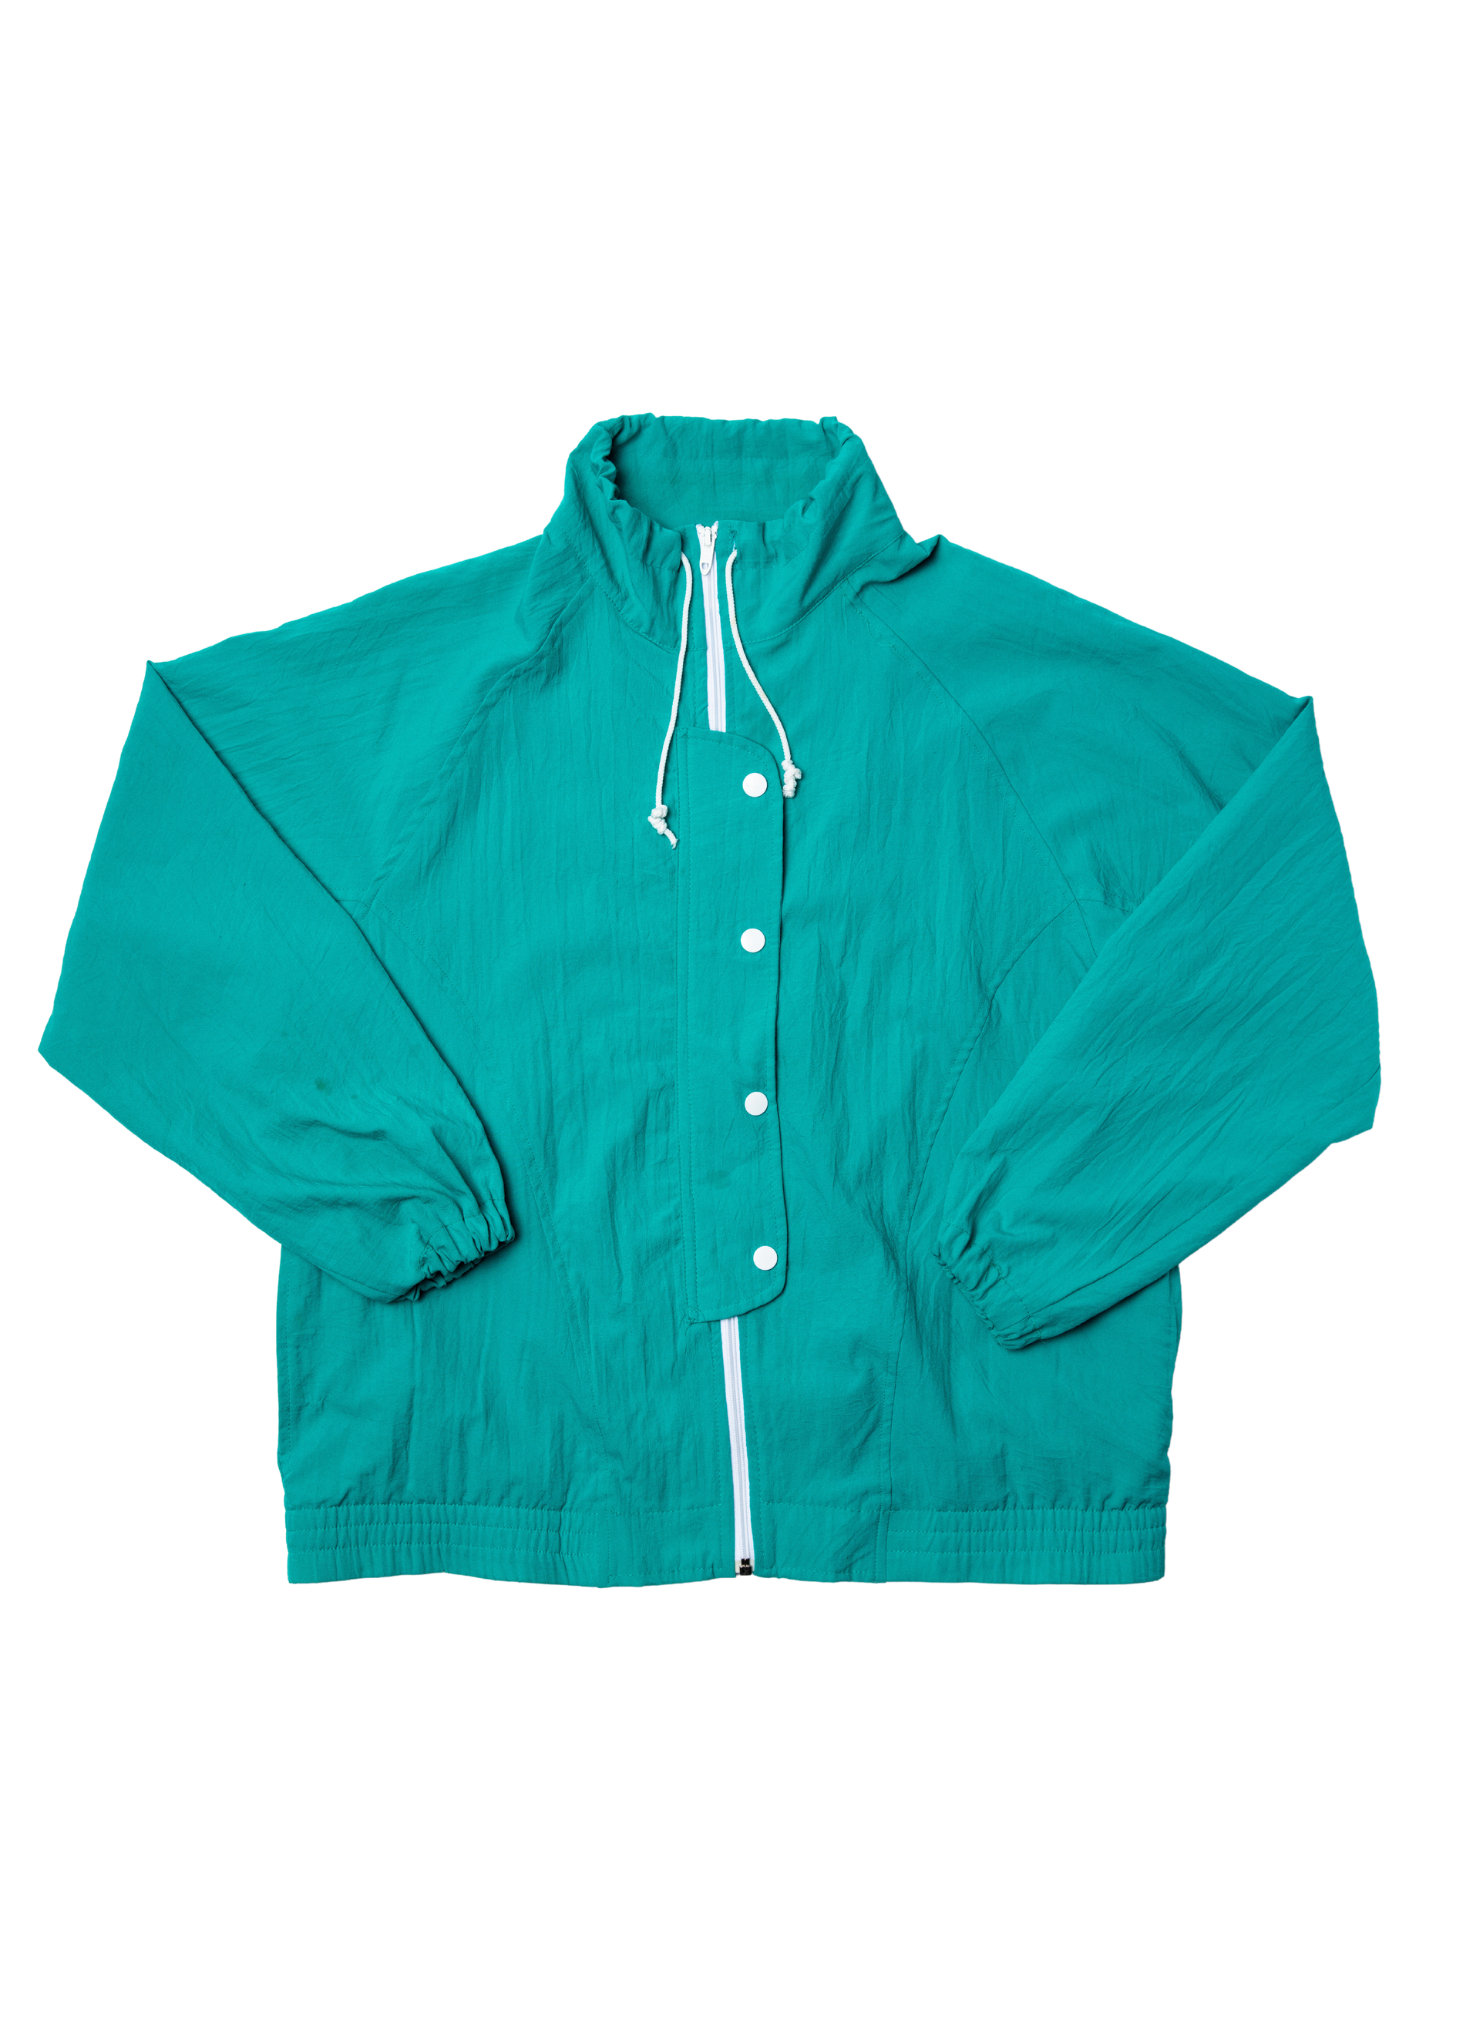 Vintage Graff Track Jacket Size: M -Turquoise